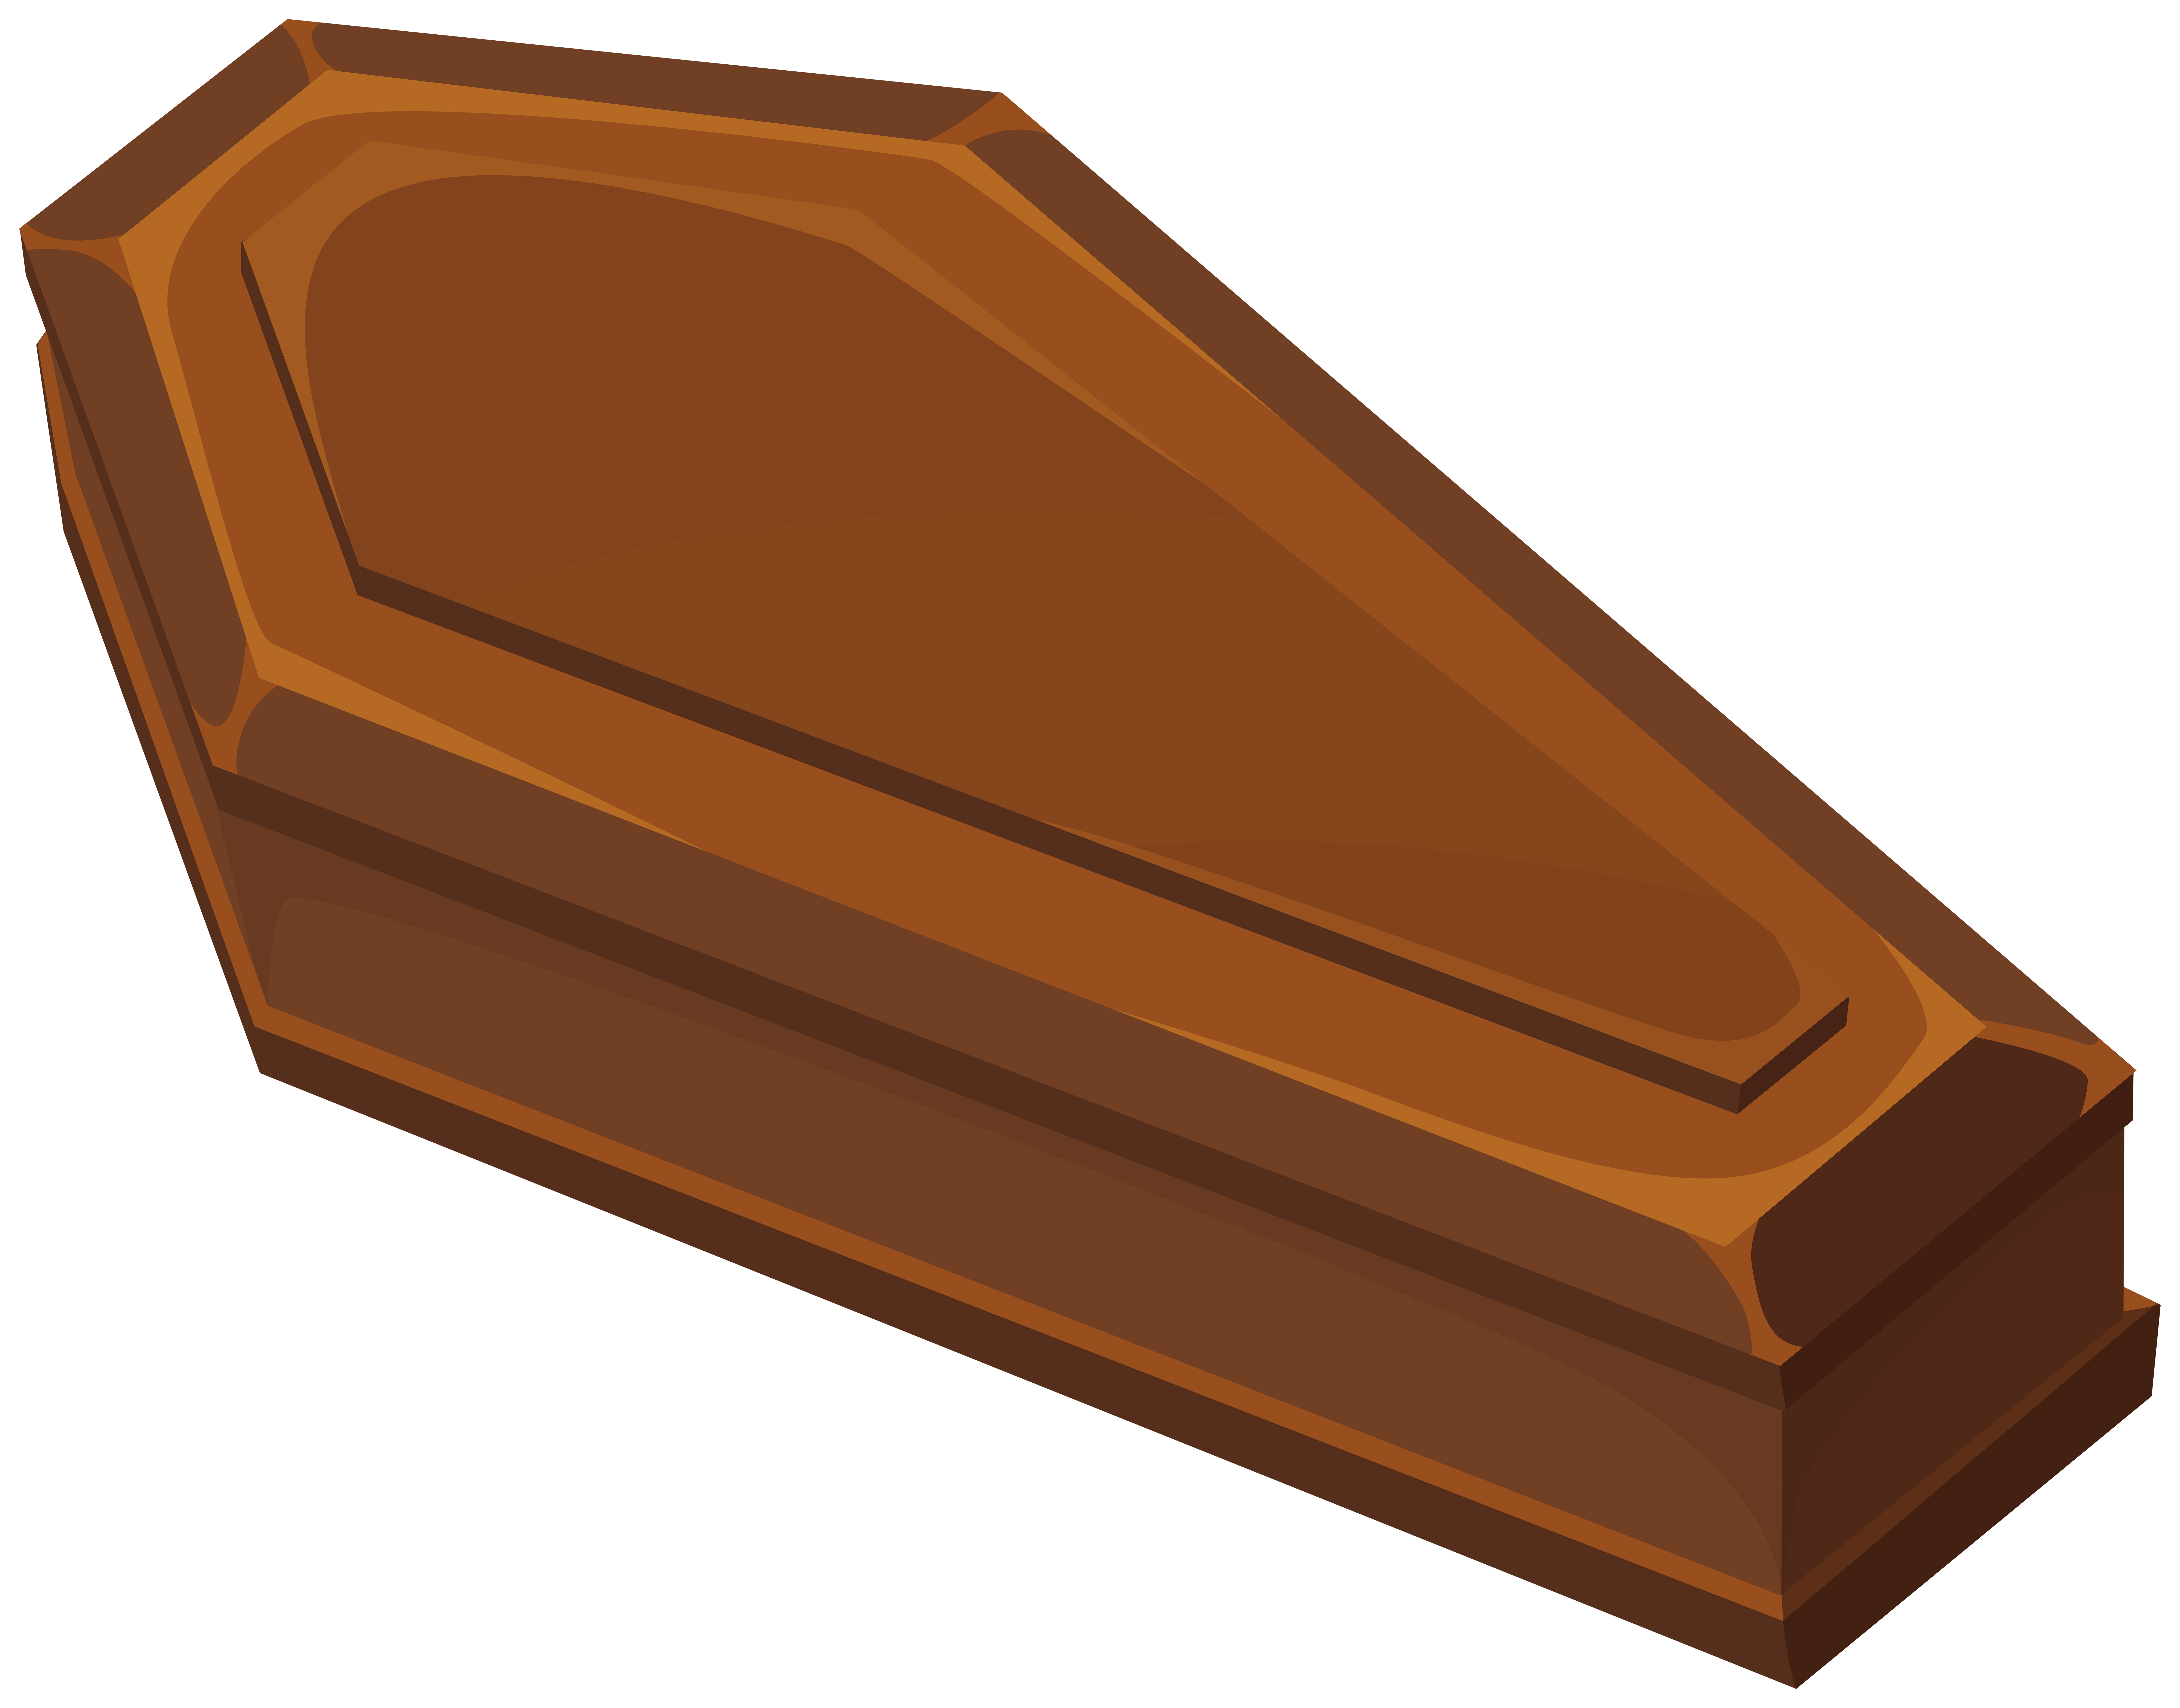 coffin clipart wooden coffin